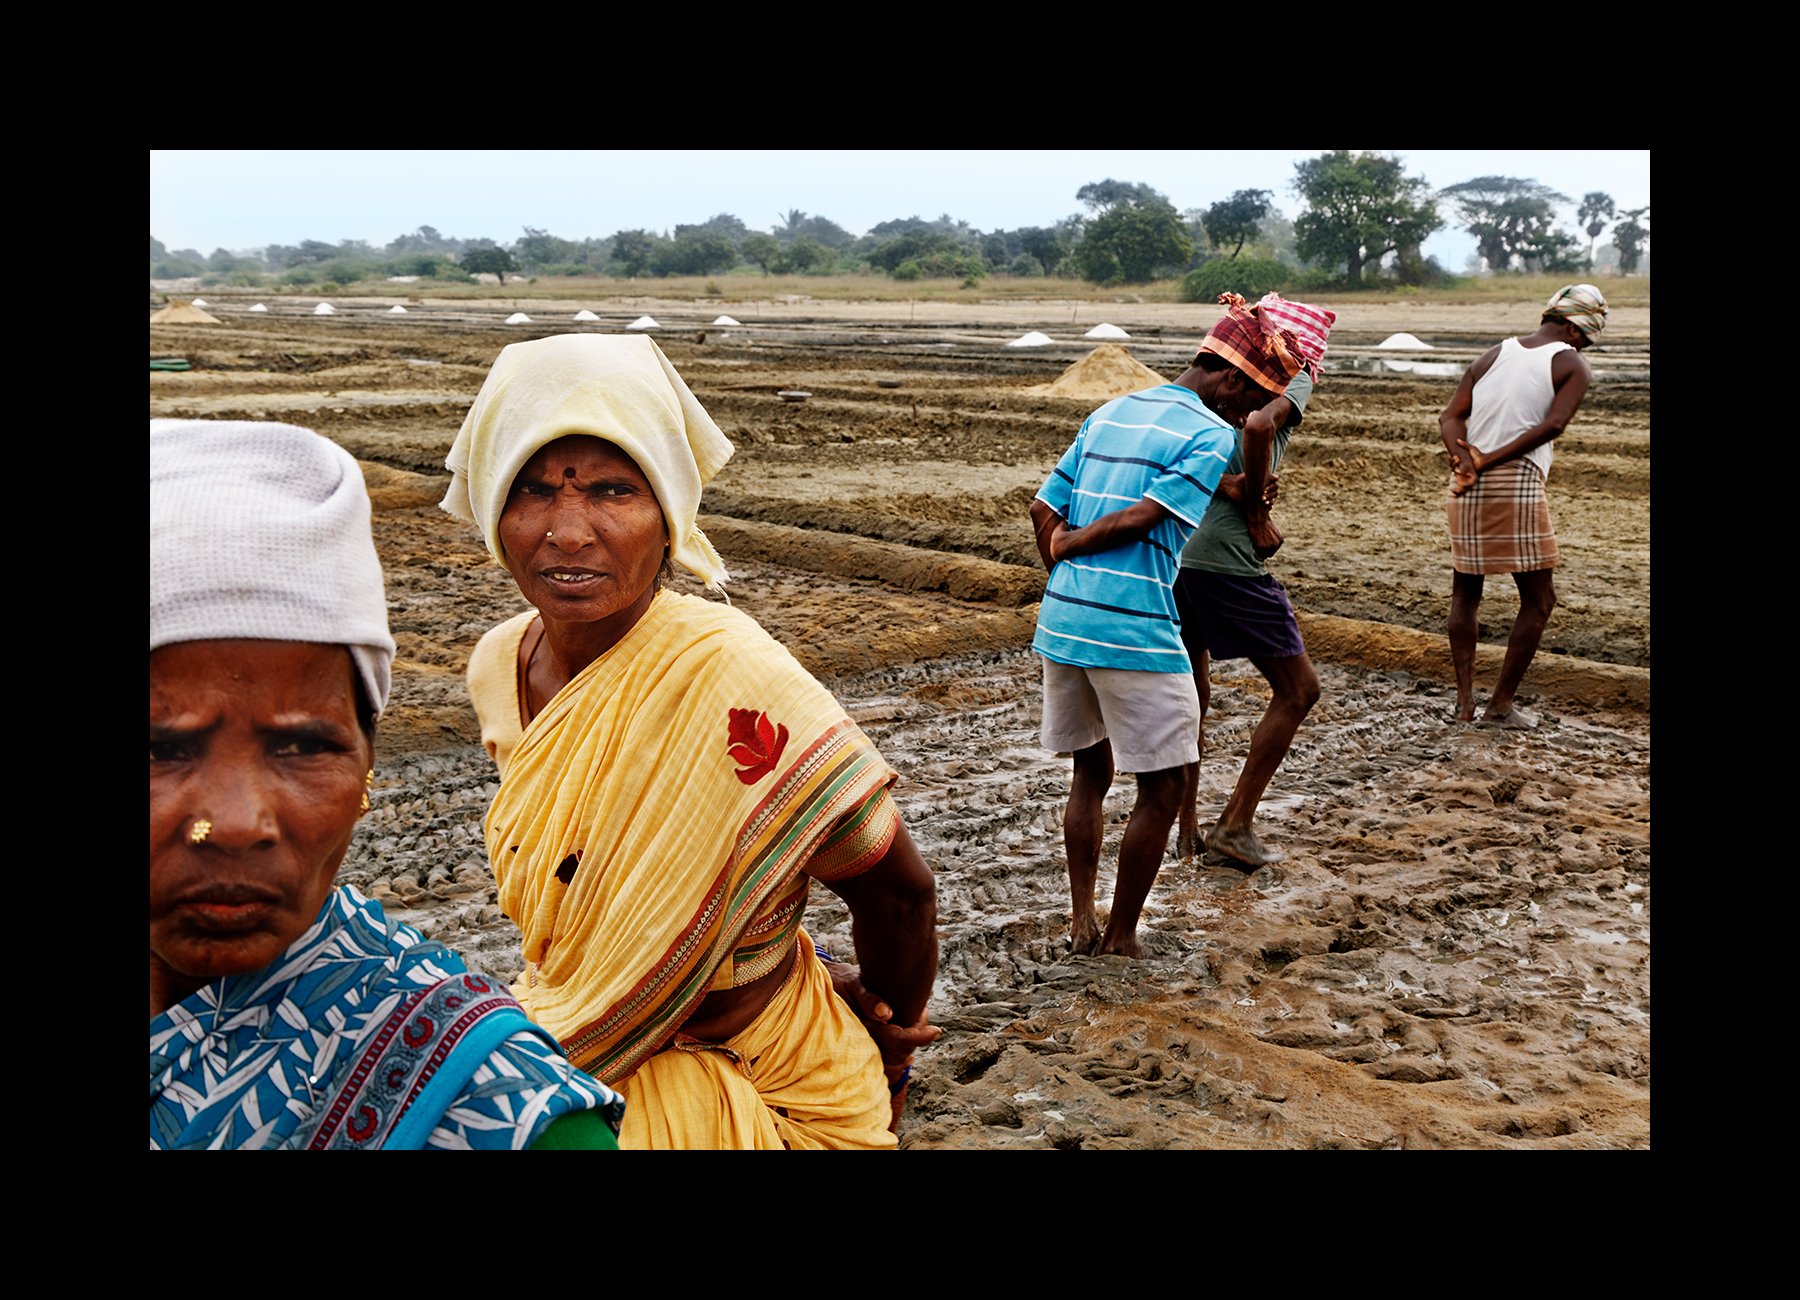  Laborers prepare the Marakannam salt pan fields for salt harvest near Pondicherry, India on Jan. 21, 2016. 